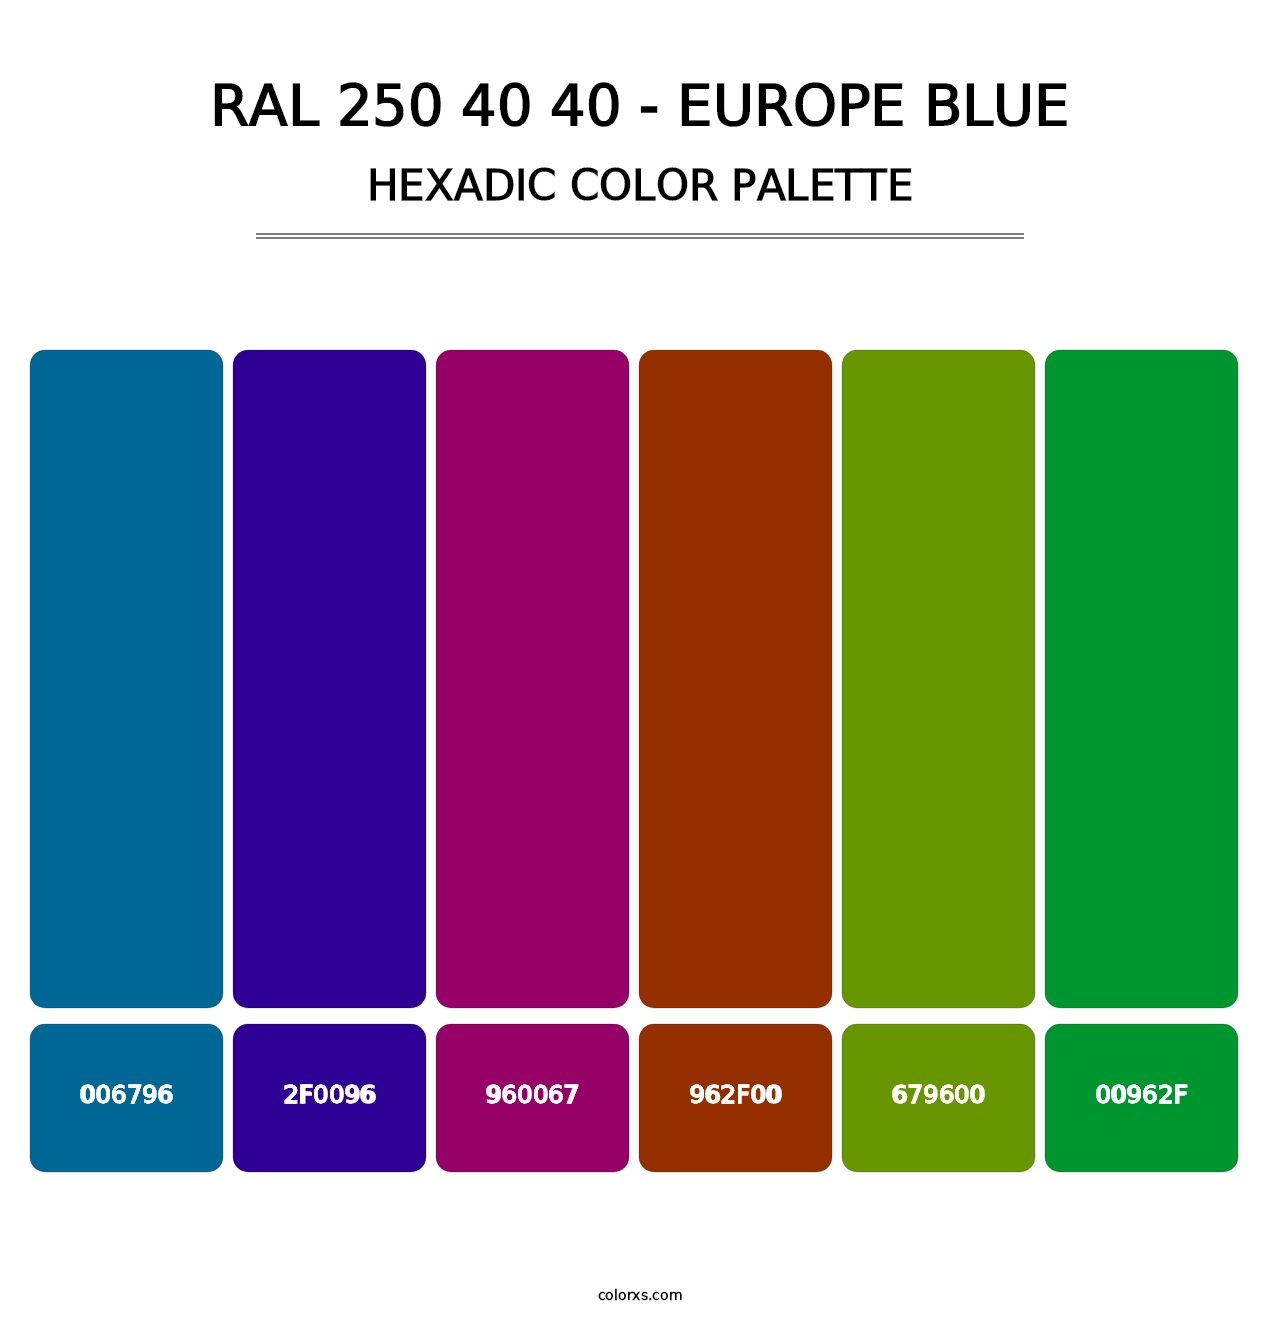 RAL 250 40 40 - Europe Blue - Hexadic Color Palette